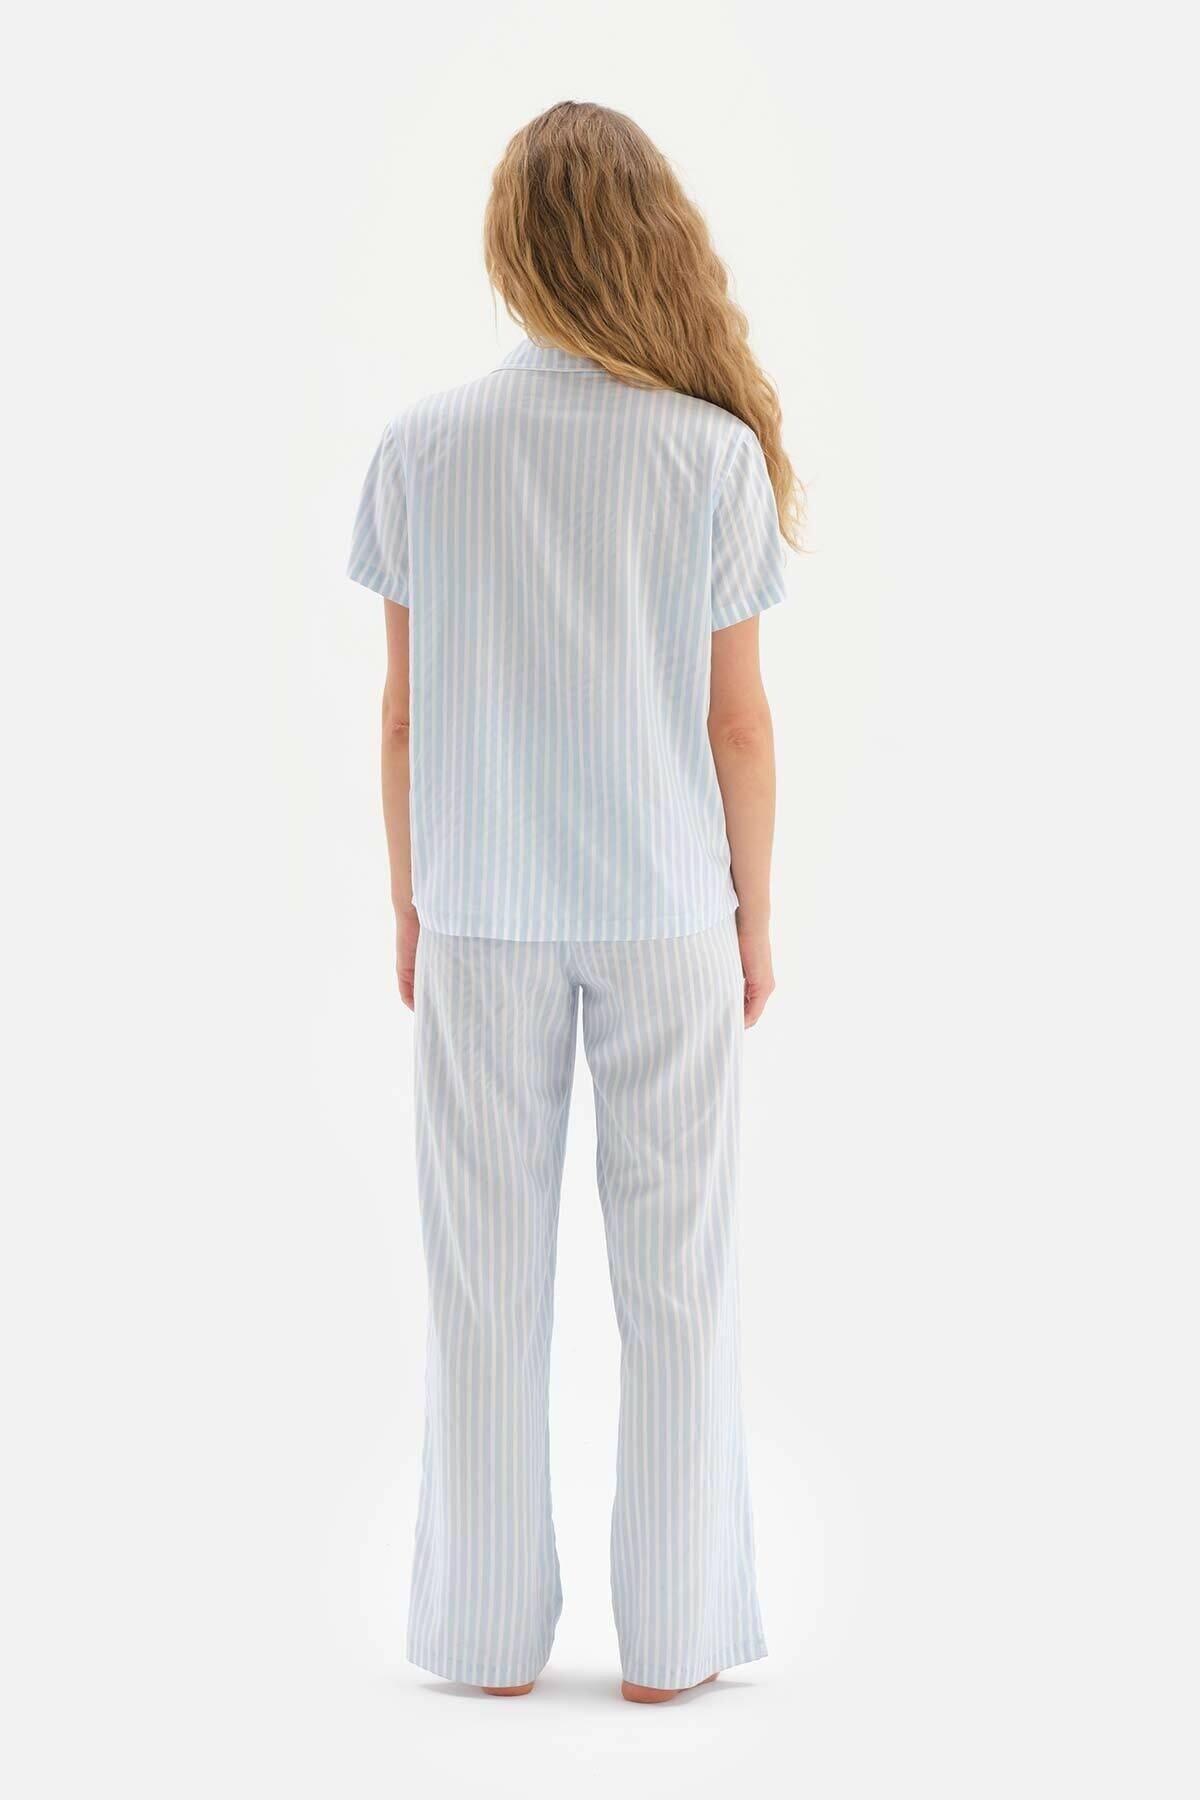 Dagi - Blue Striped Woven Pyjamas Set